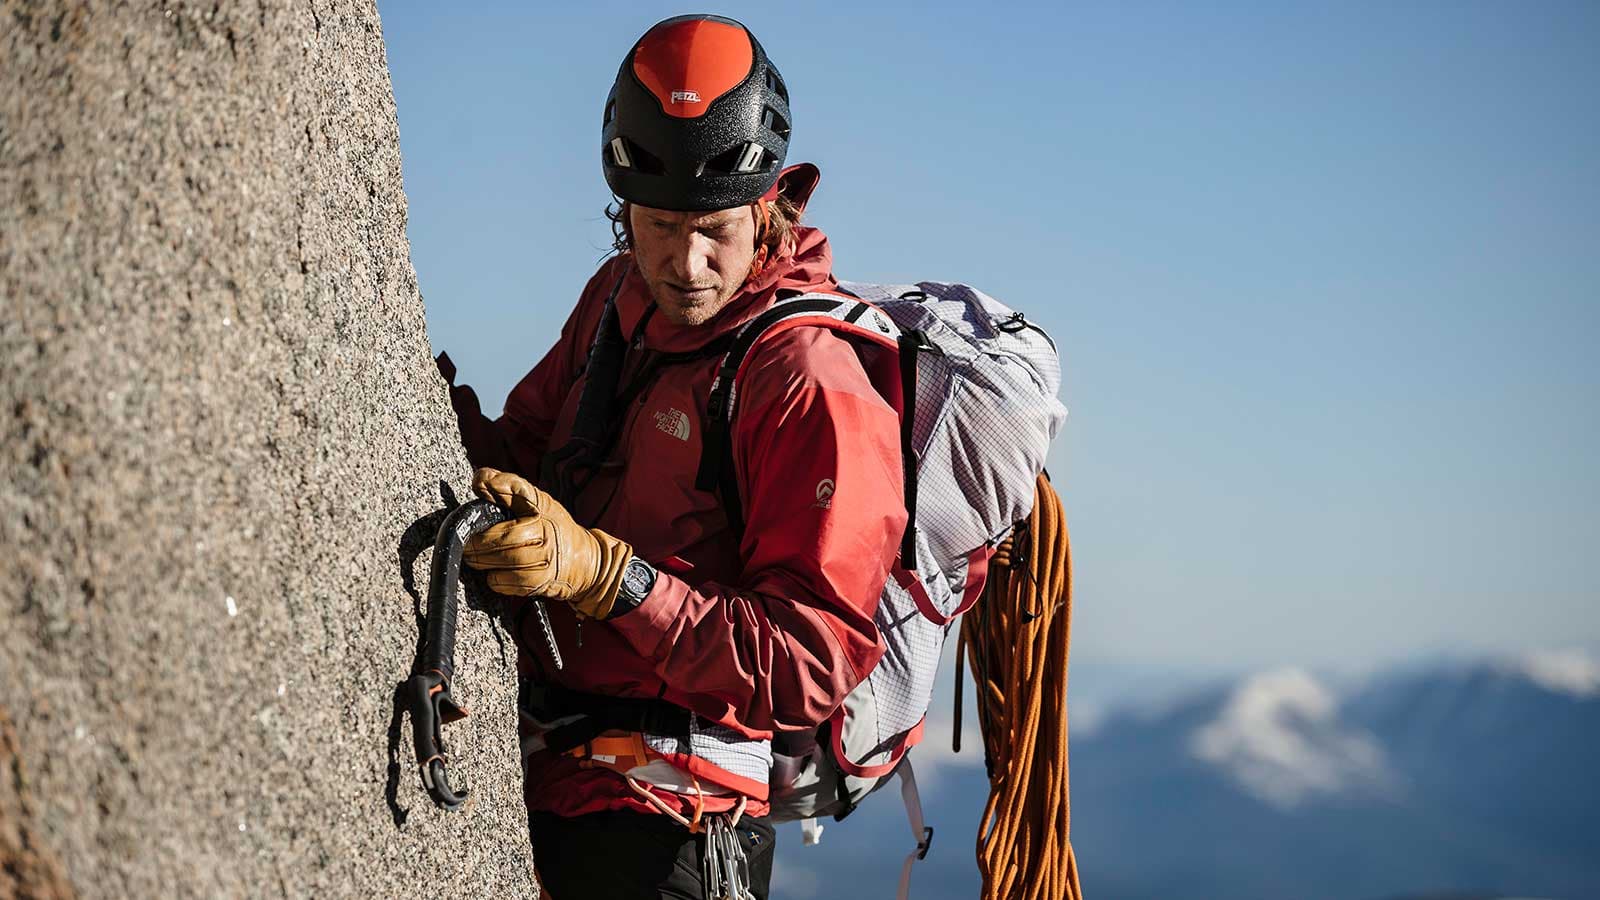 BST Overseas “Everest” đậm chất phiêu lưu của Vacheron Constantin